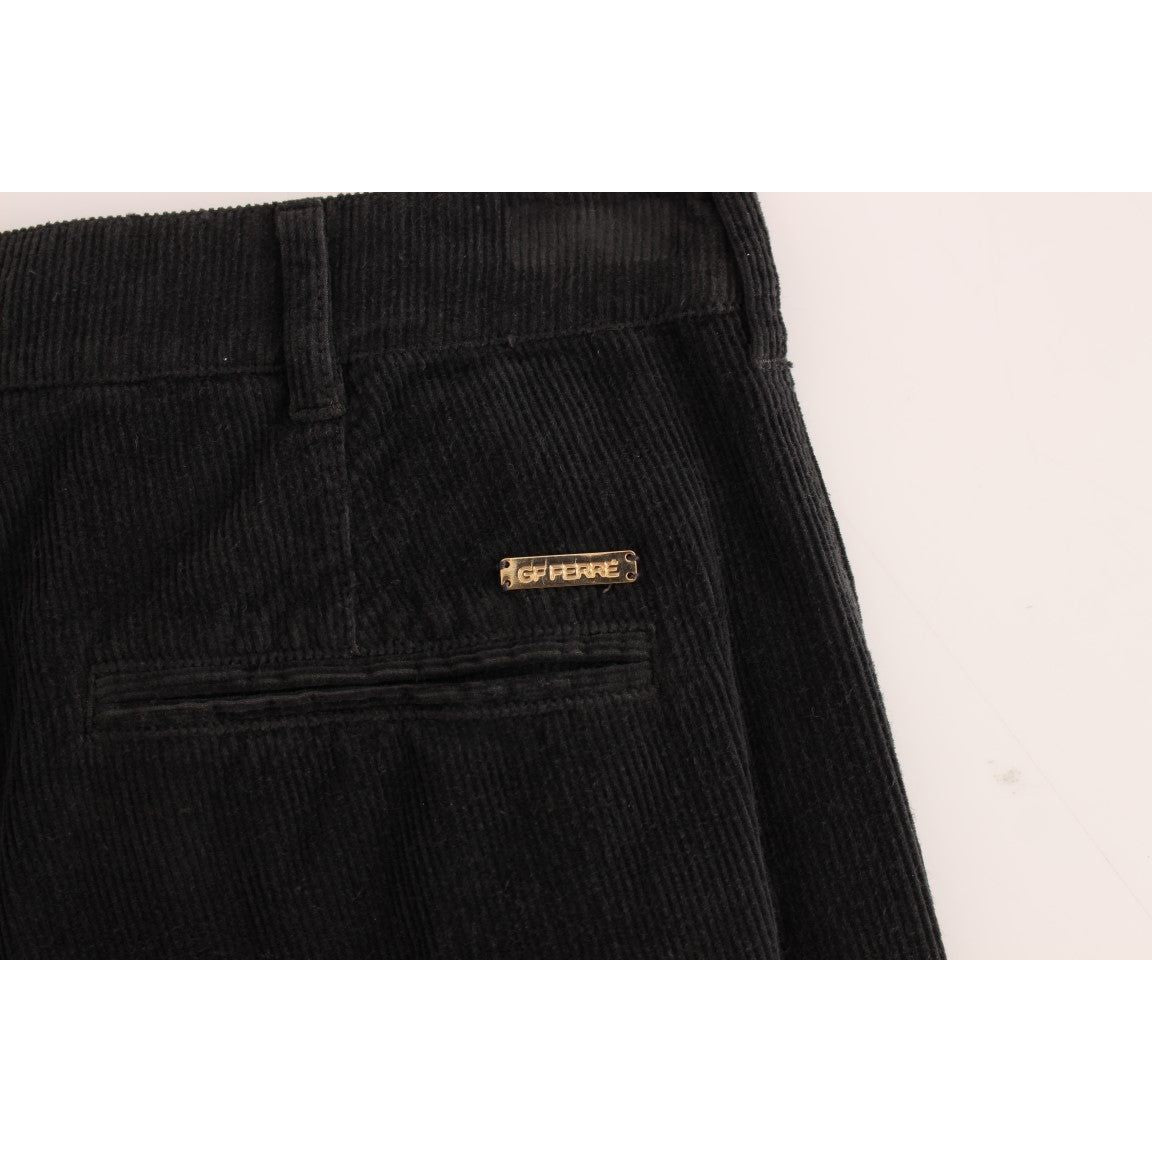 GF Ferre Elegant Black Cotton Corduroy Pants black-corduroy-cotton-straight-fit-pants Jeans & Pants 53278-black-corduroy-cotton-straight-fit-pants-5.jpg